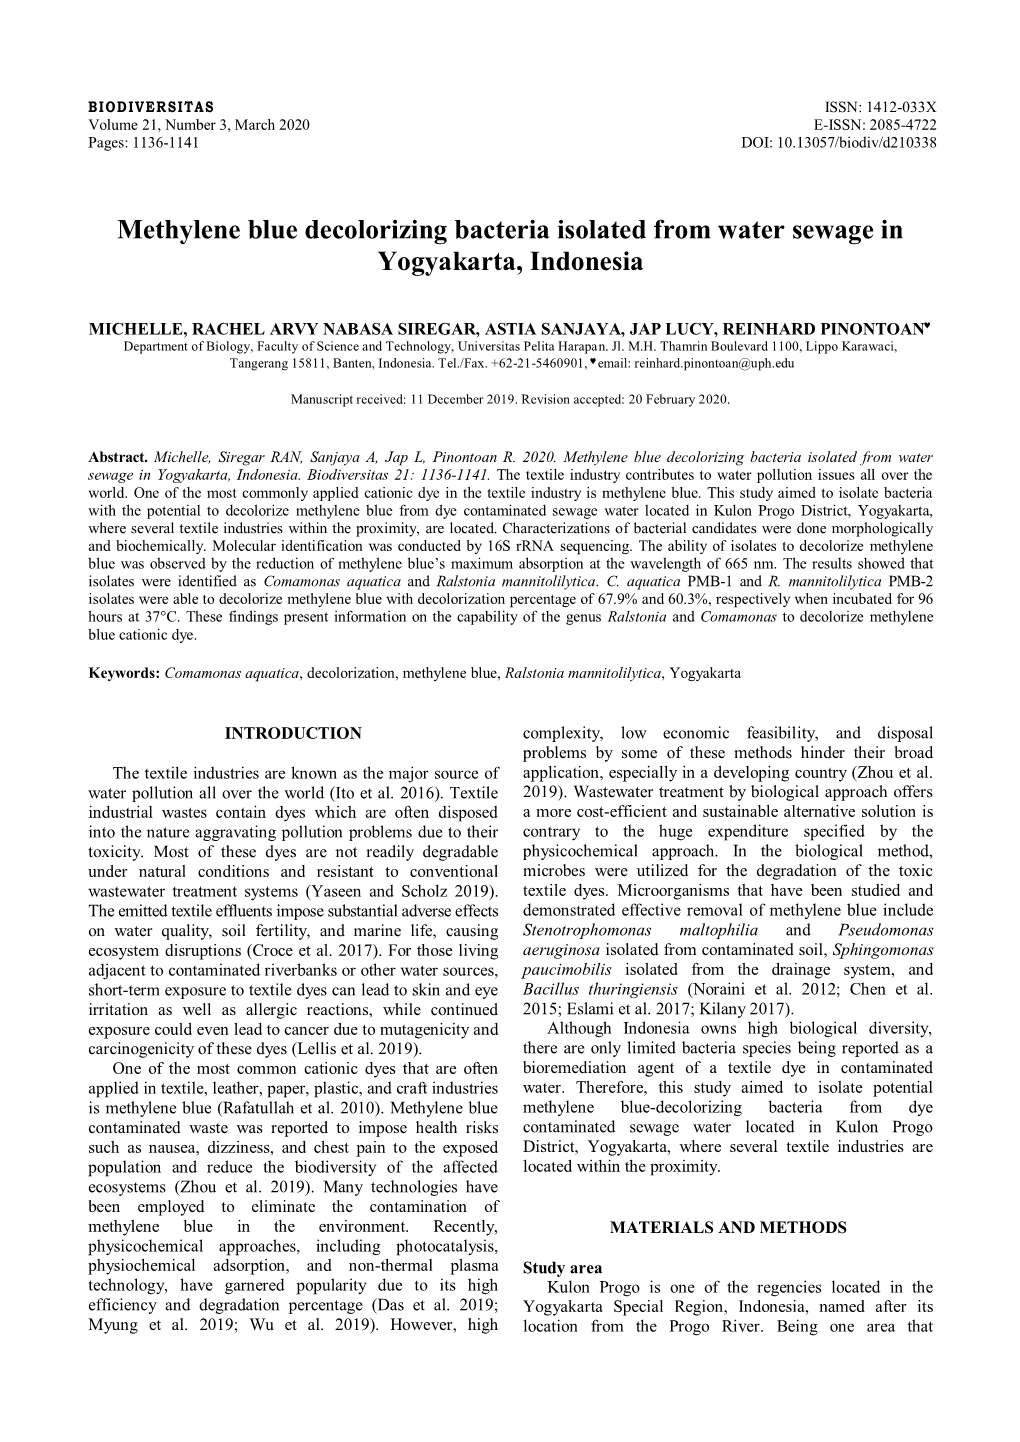 Methylene Blue Decolorizing Bacteria Isolated from Water Sewage in Yogyakarta, Indonesia